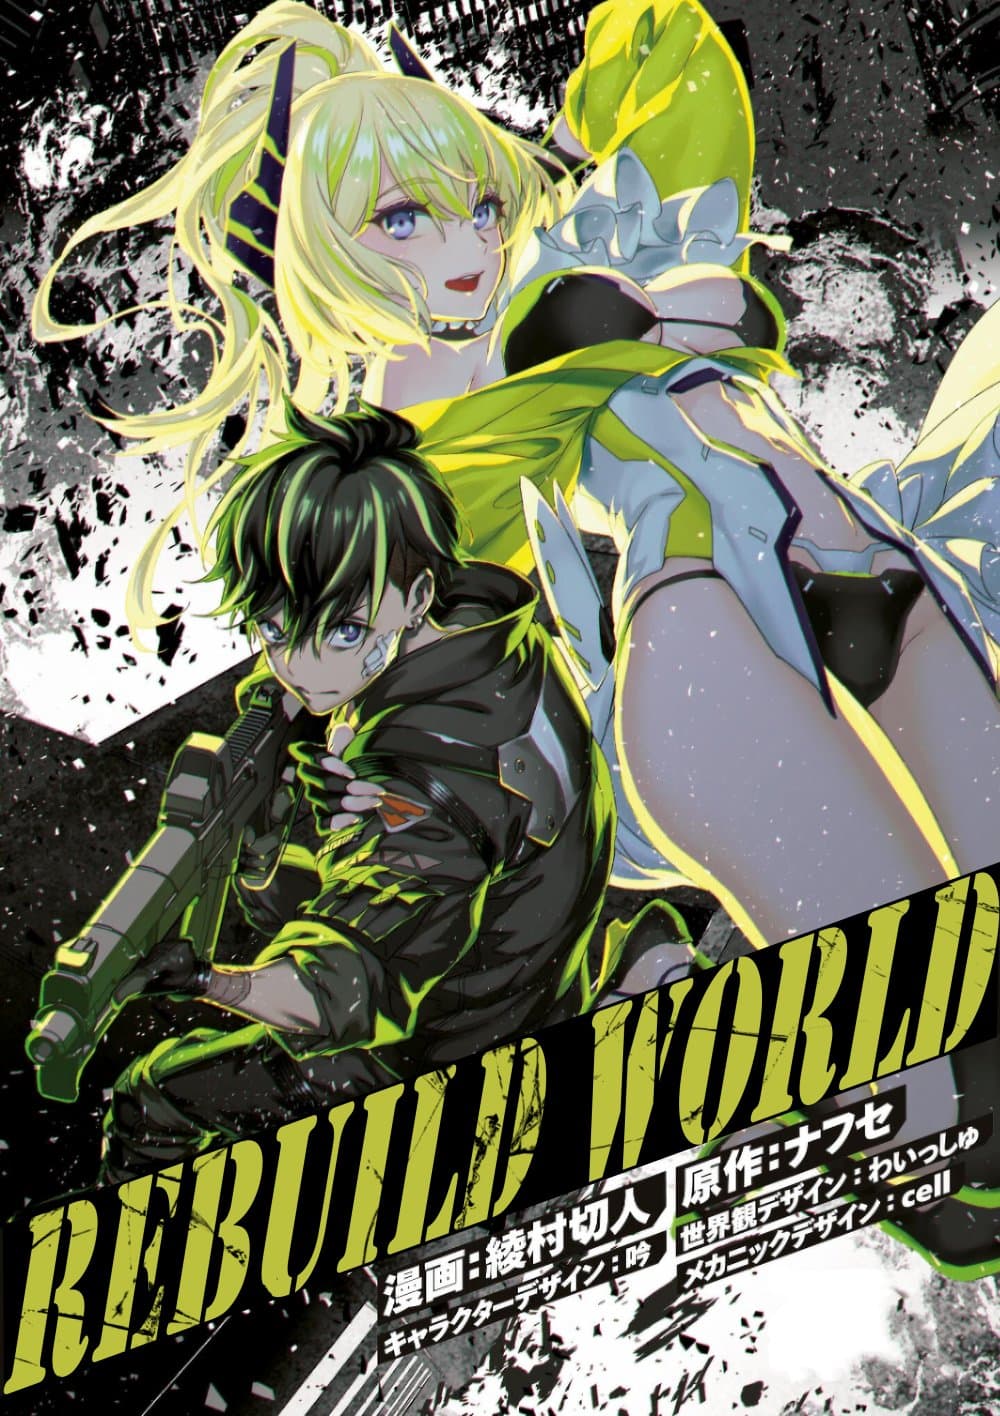 Rebuild World 21 (1)